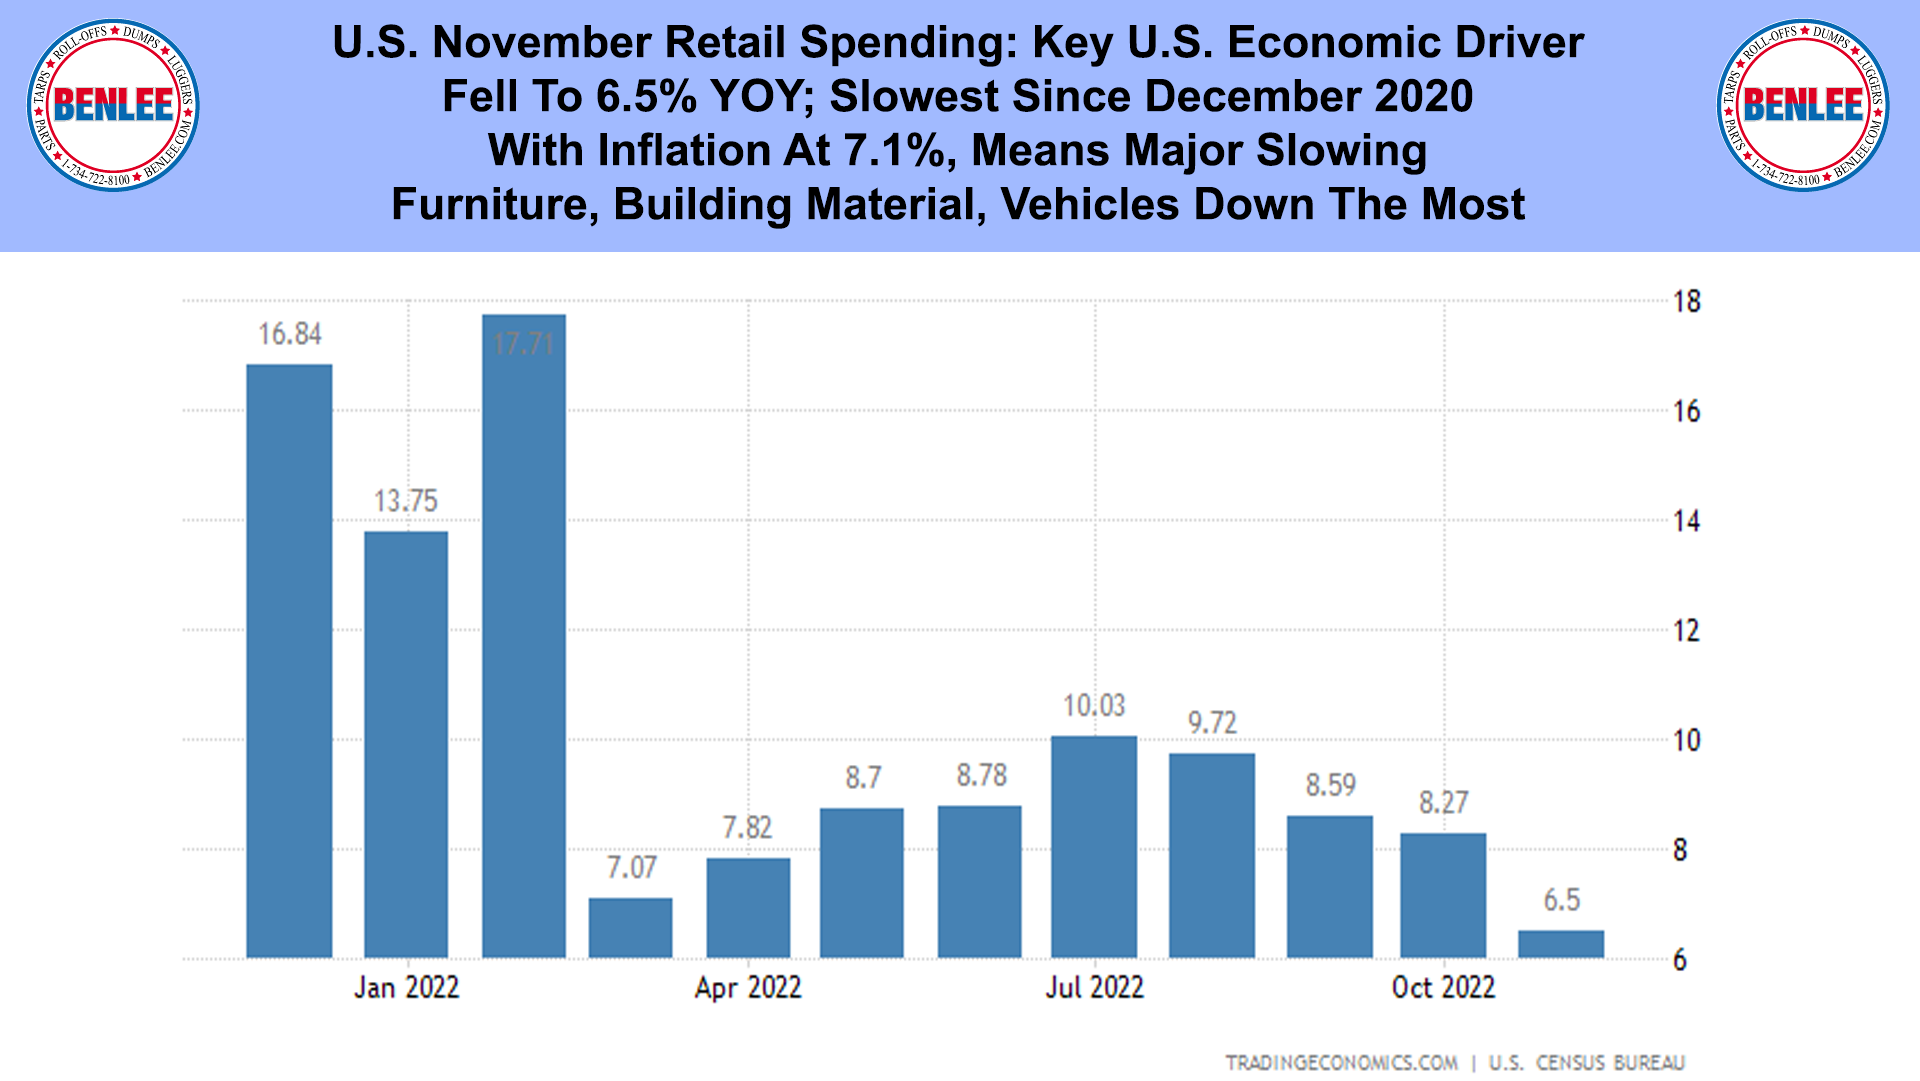 U.S. November Retail Spending